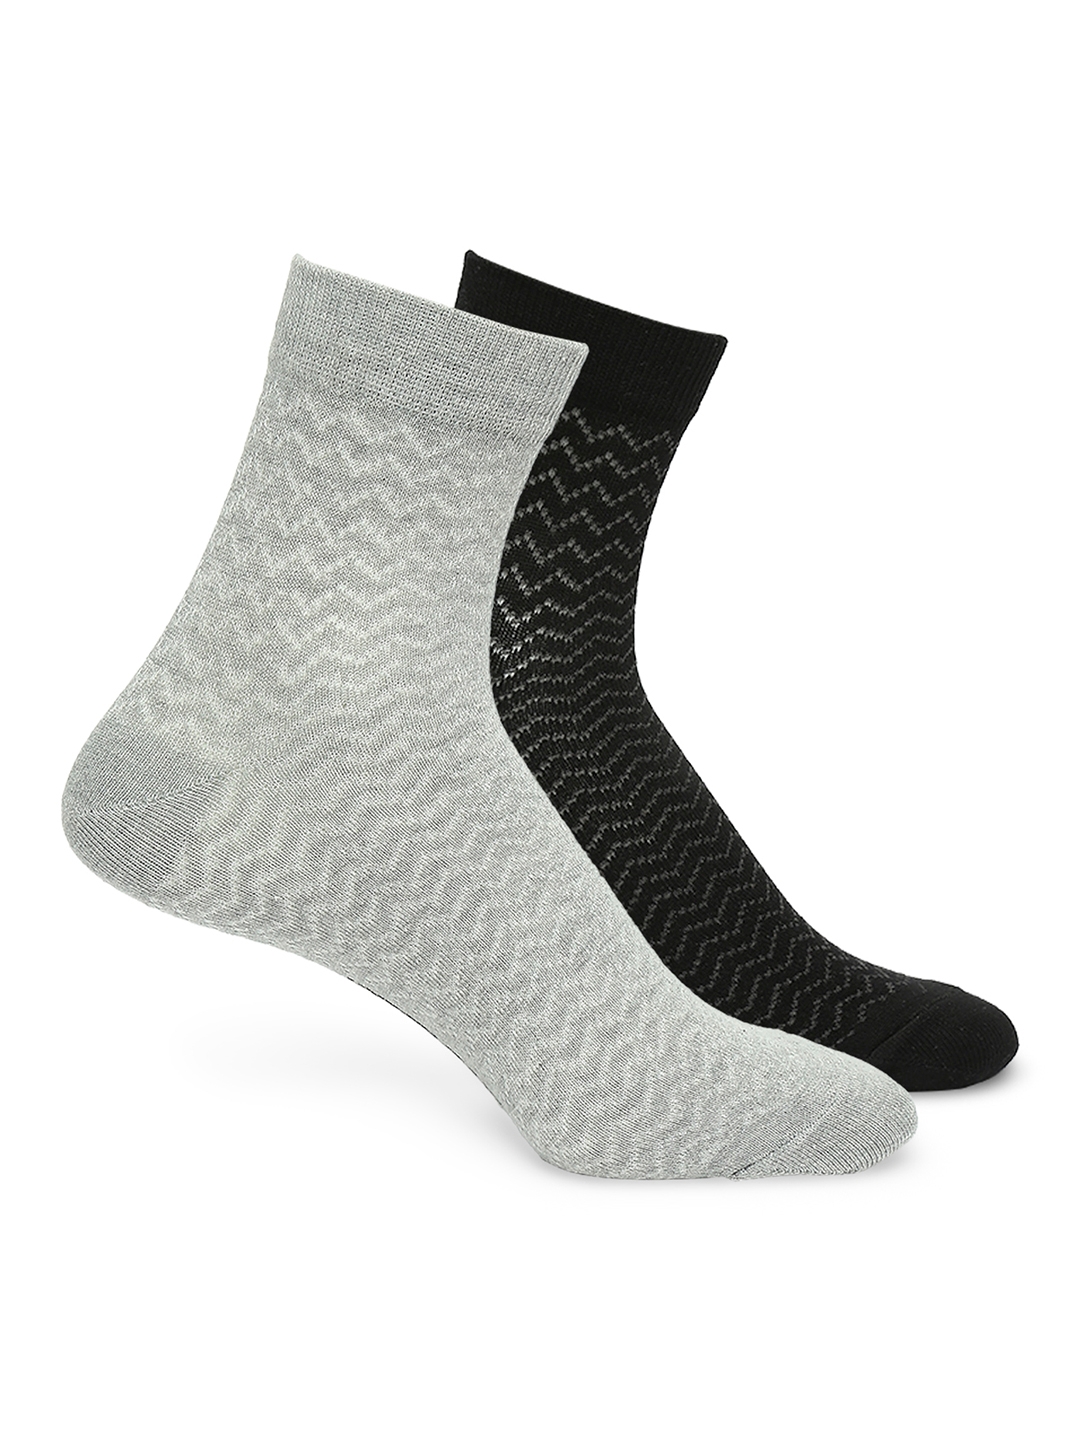 spykar | Underjeans by Spykar Premium Black & Grey Melange Ankle Length Socks - Pack Of 2